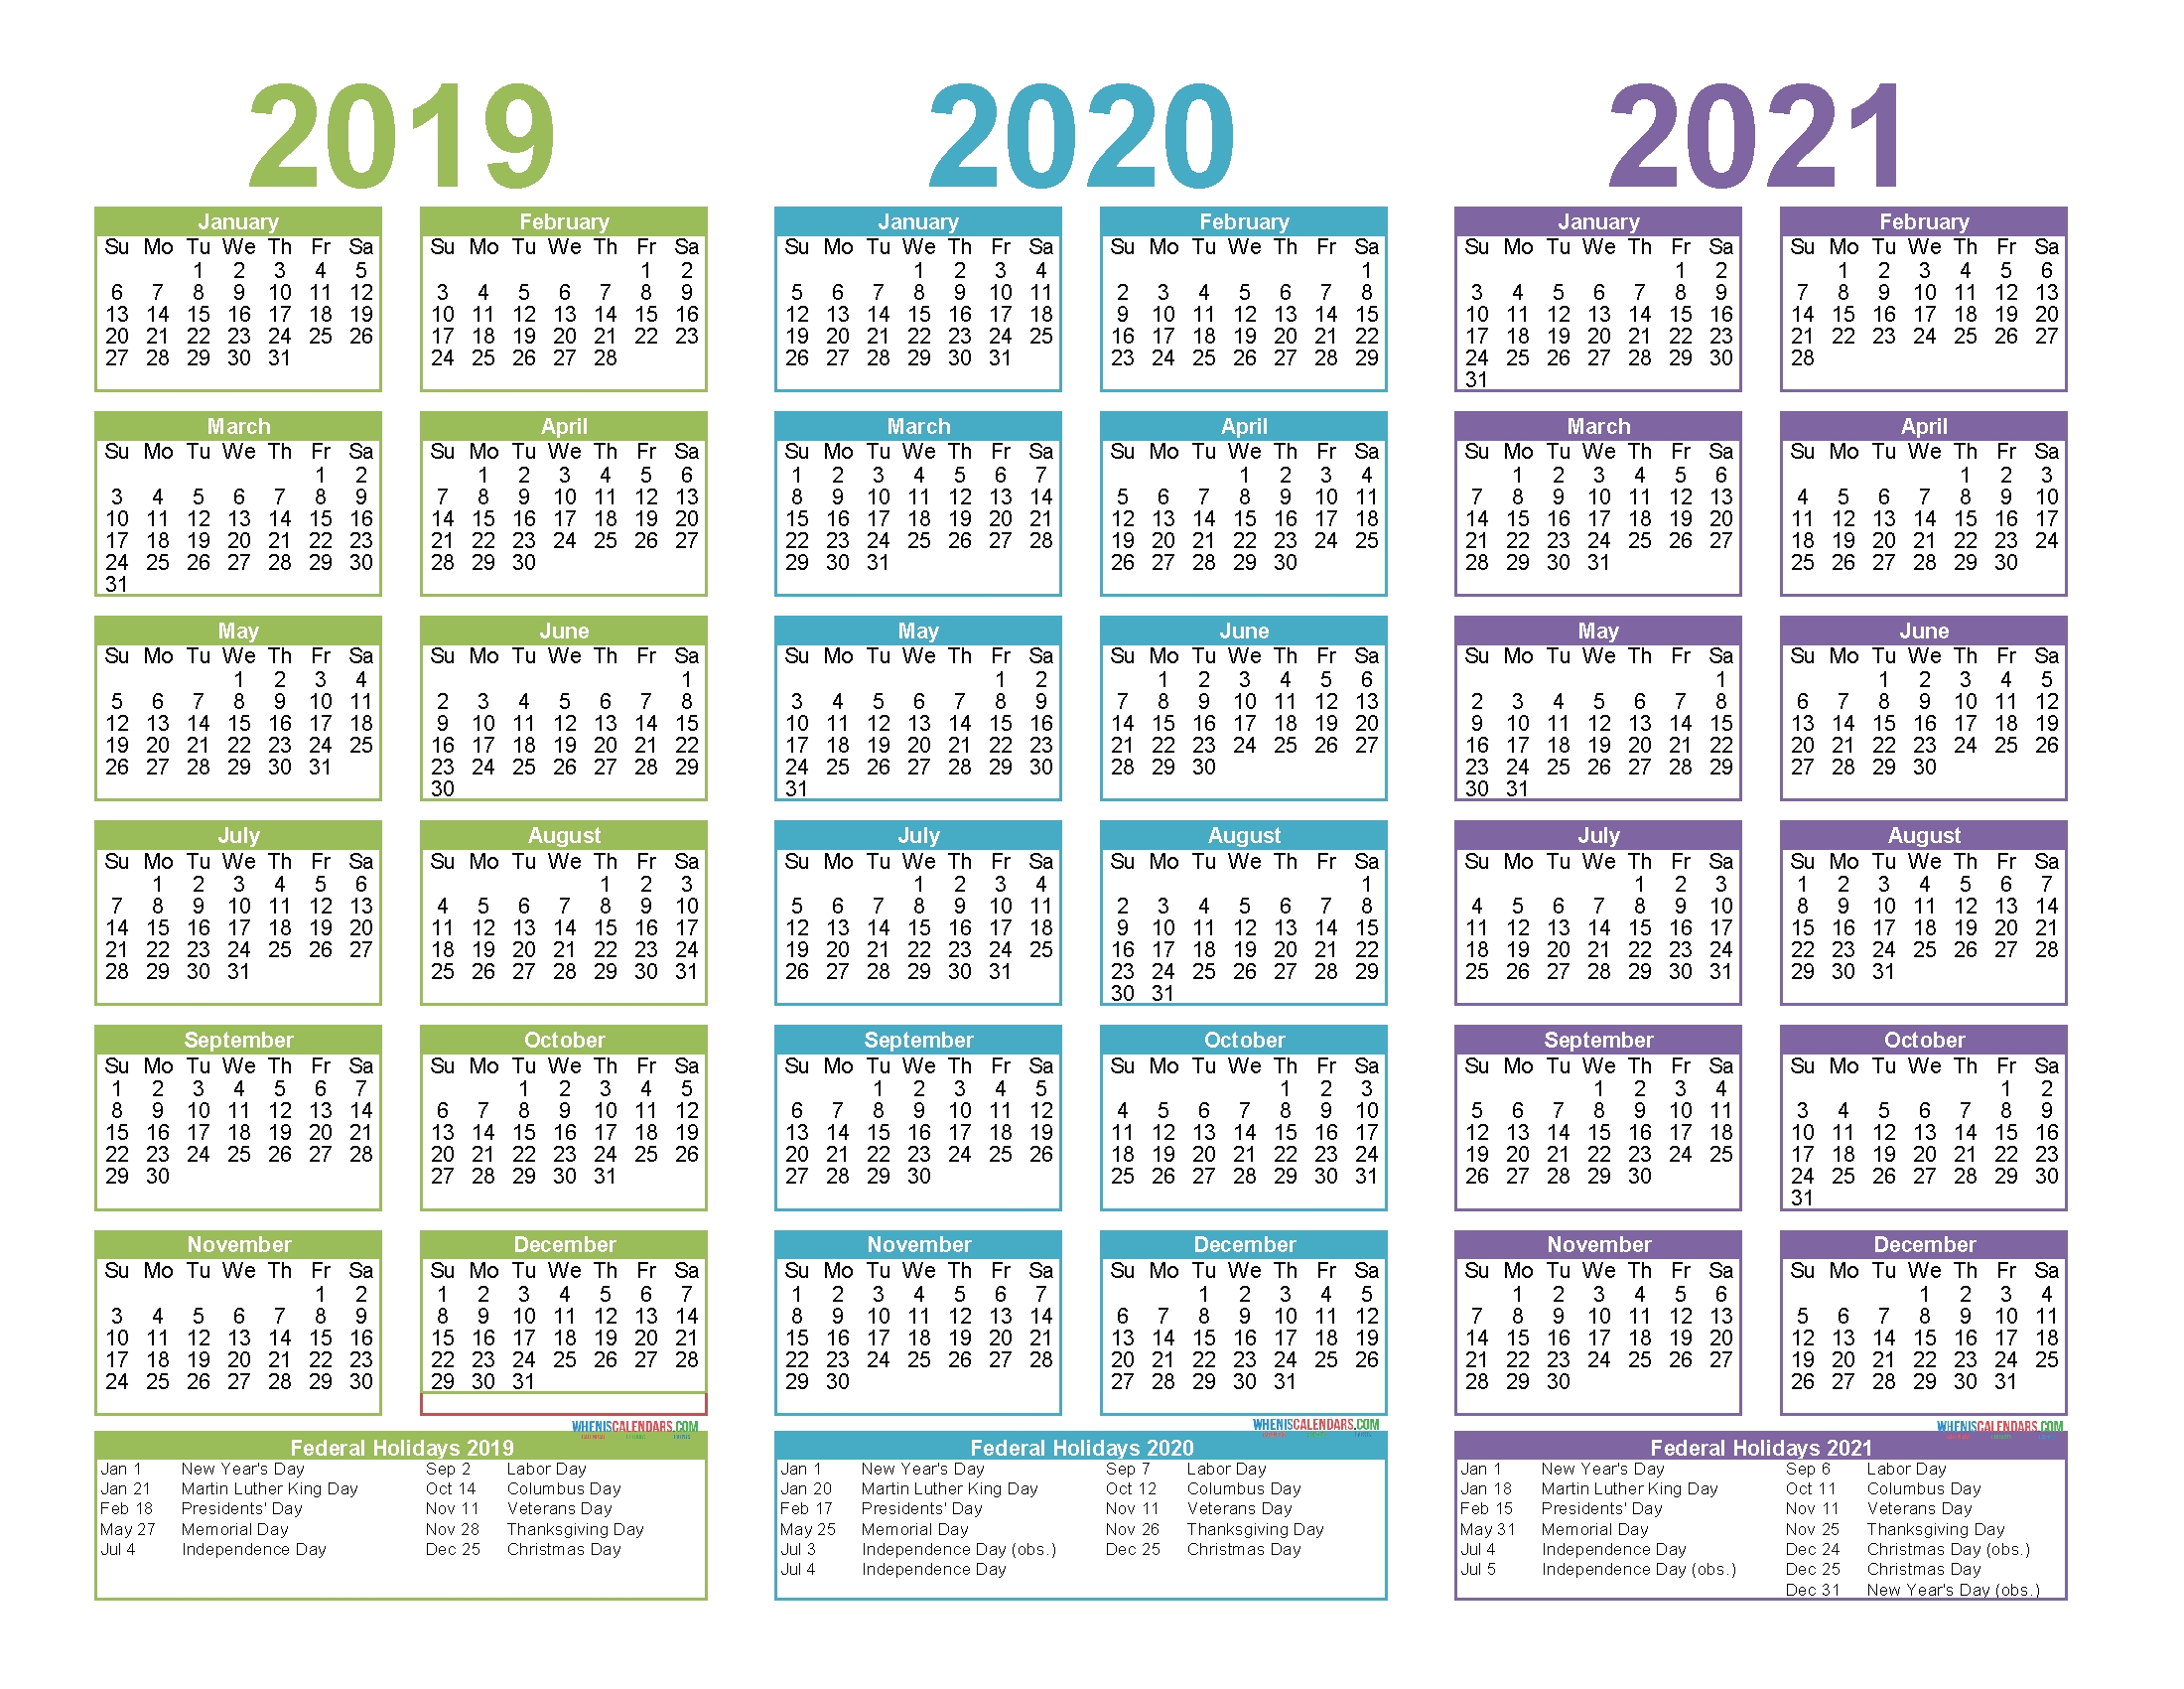 2019 To 2021 3 Year Calendar Printable Free Pdf, Word, Image-Calendar 2021 Column Printable